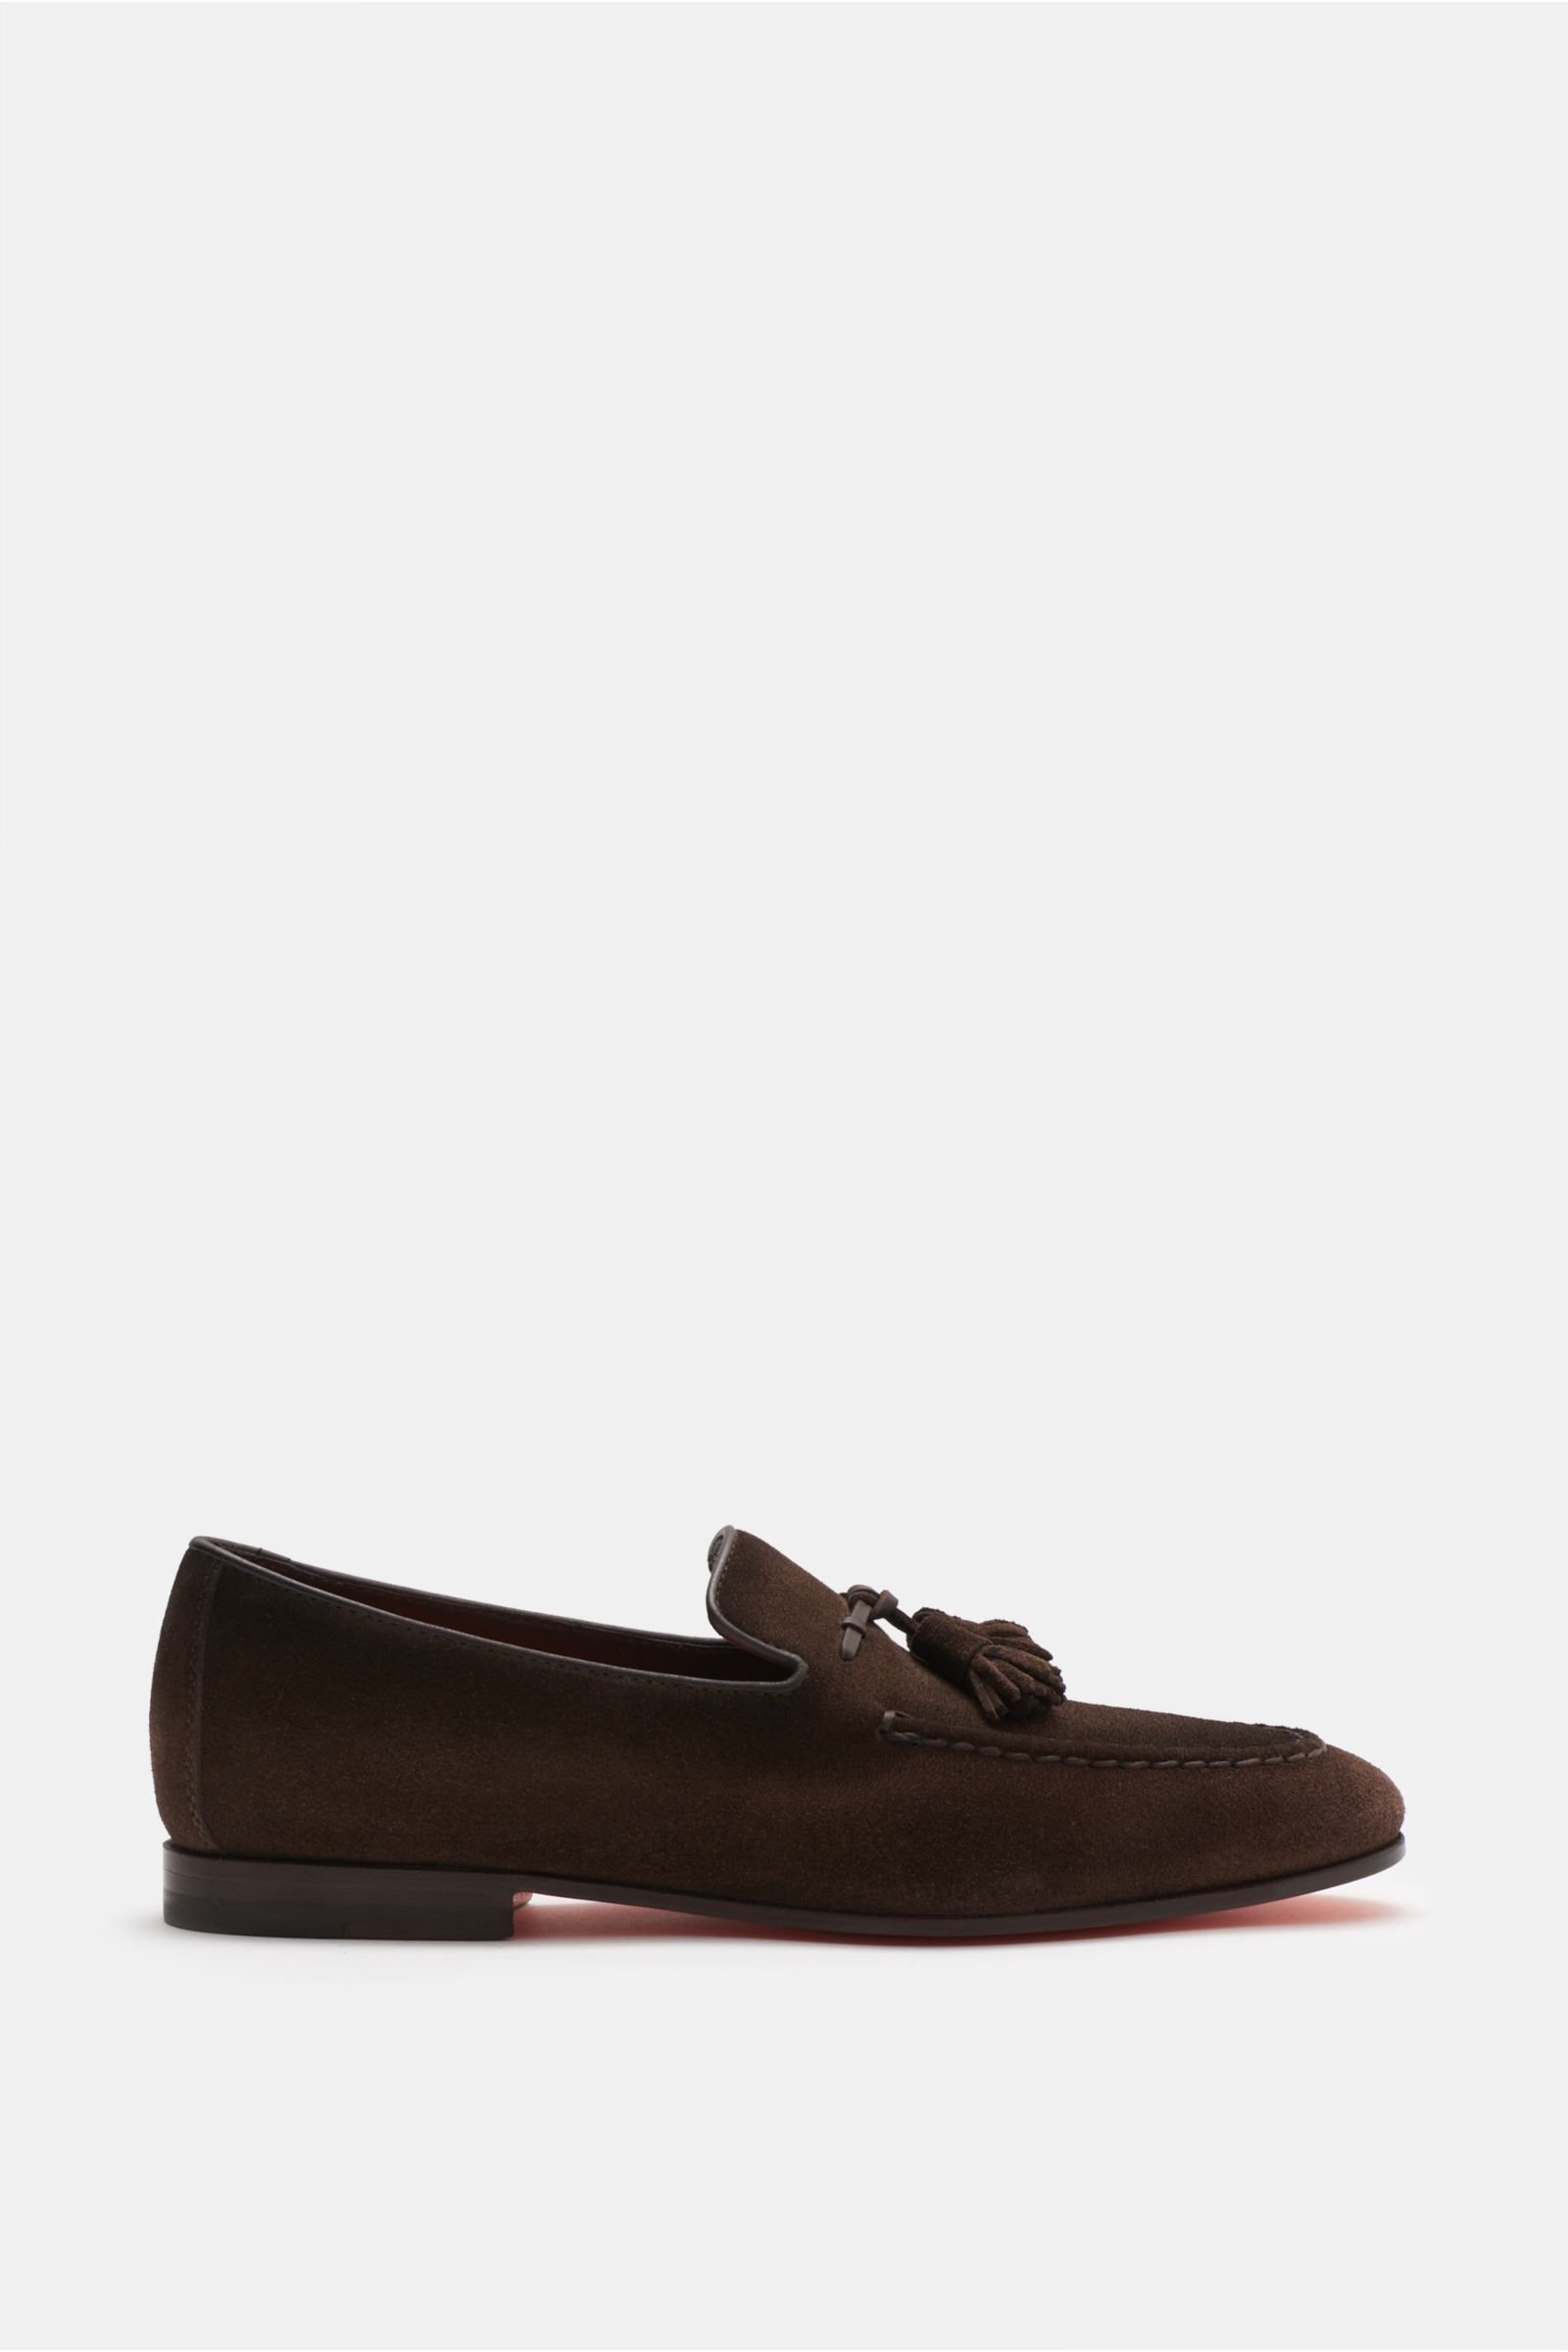 Tassel loafers dark brown